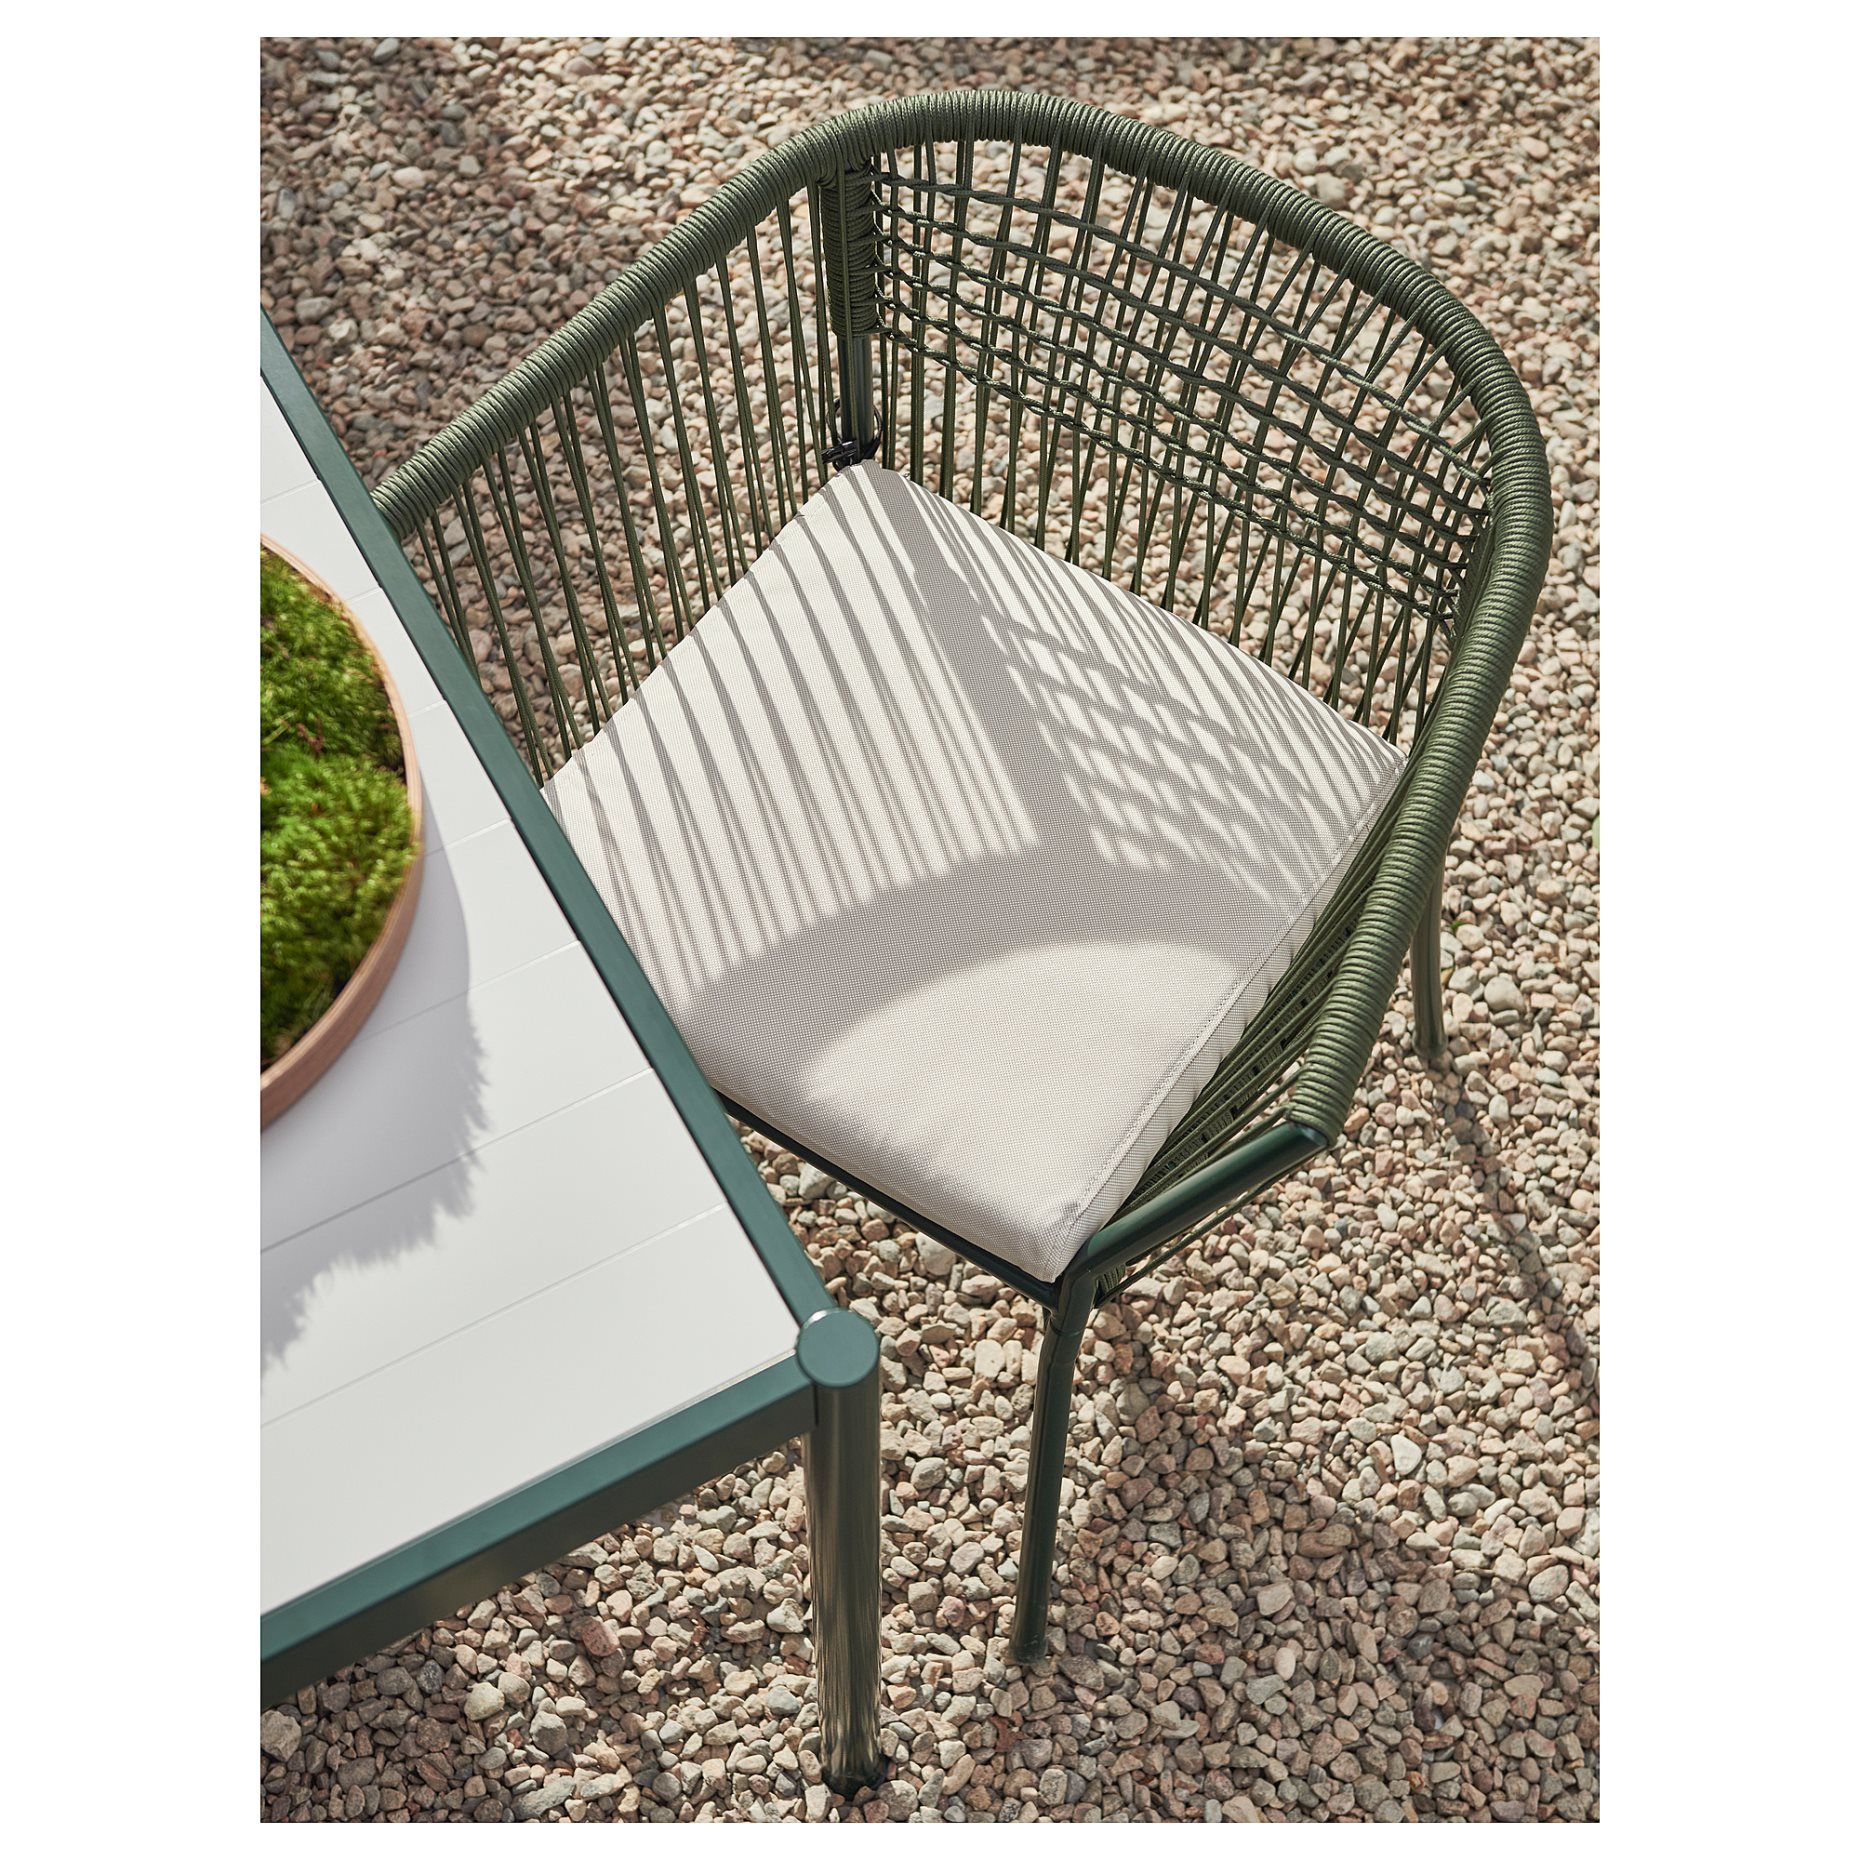 SEGERÖN, τραπέζι/6 καρέκλες με μπράτσα/εξωτερικού χώρου, 147 cm, 894.948.47